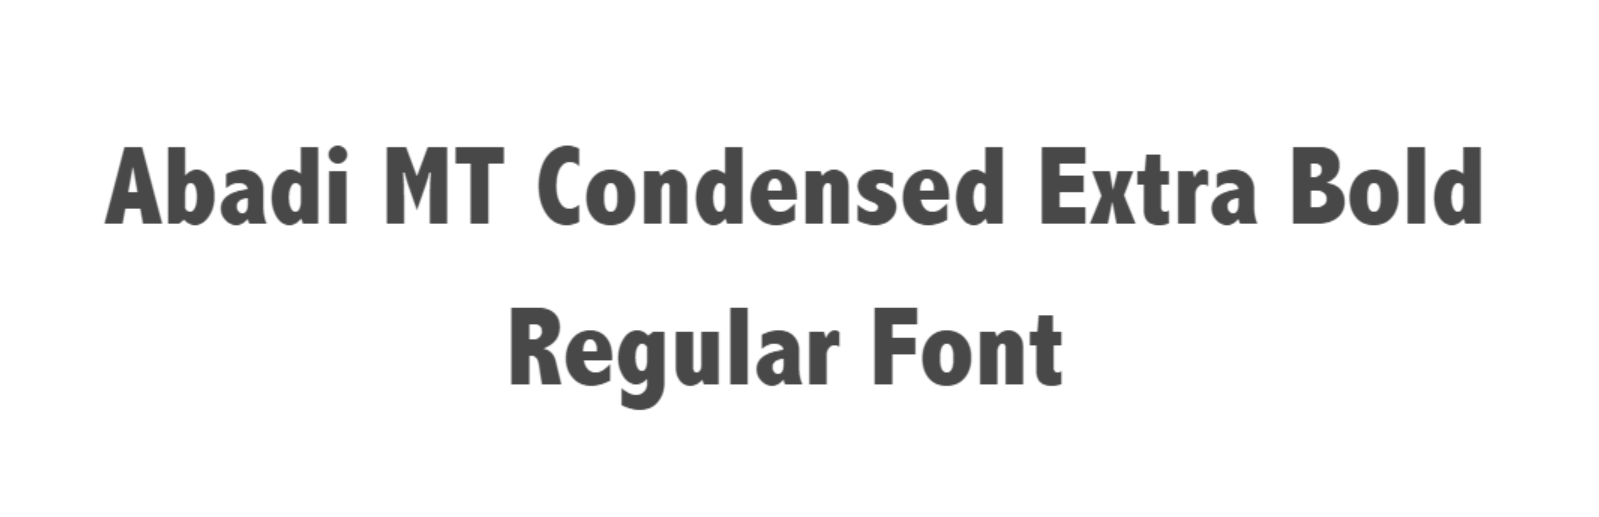 Abadi MT Condensed Extra Bold Regular Font